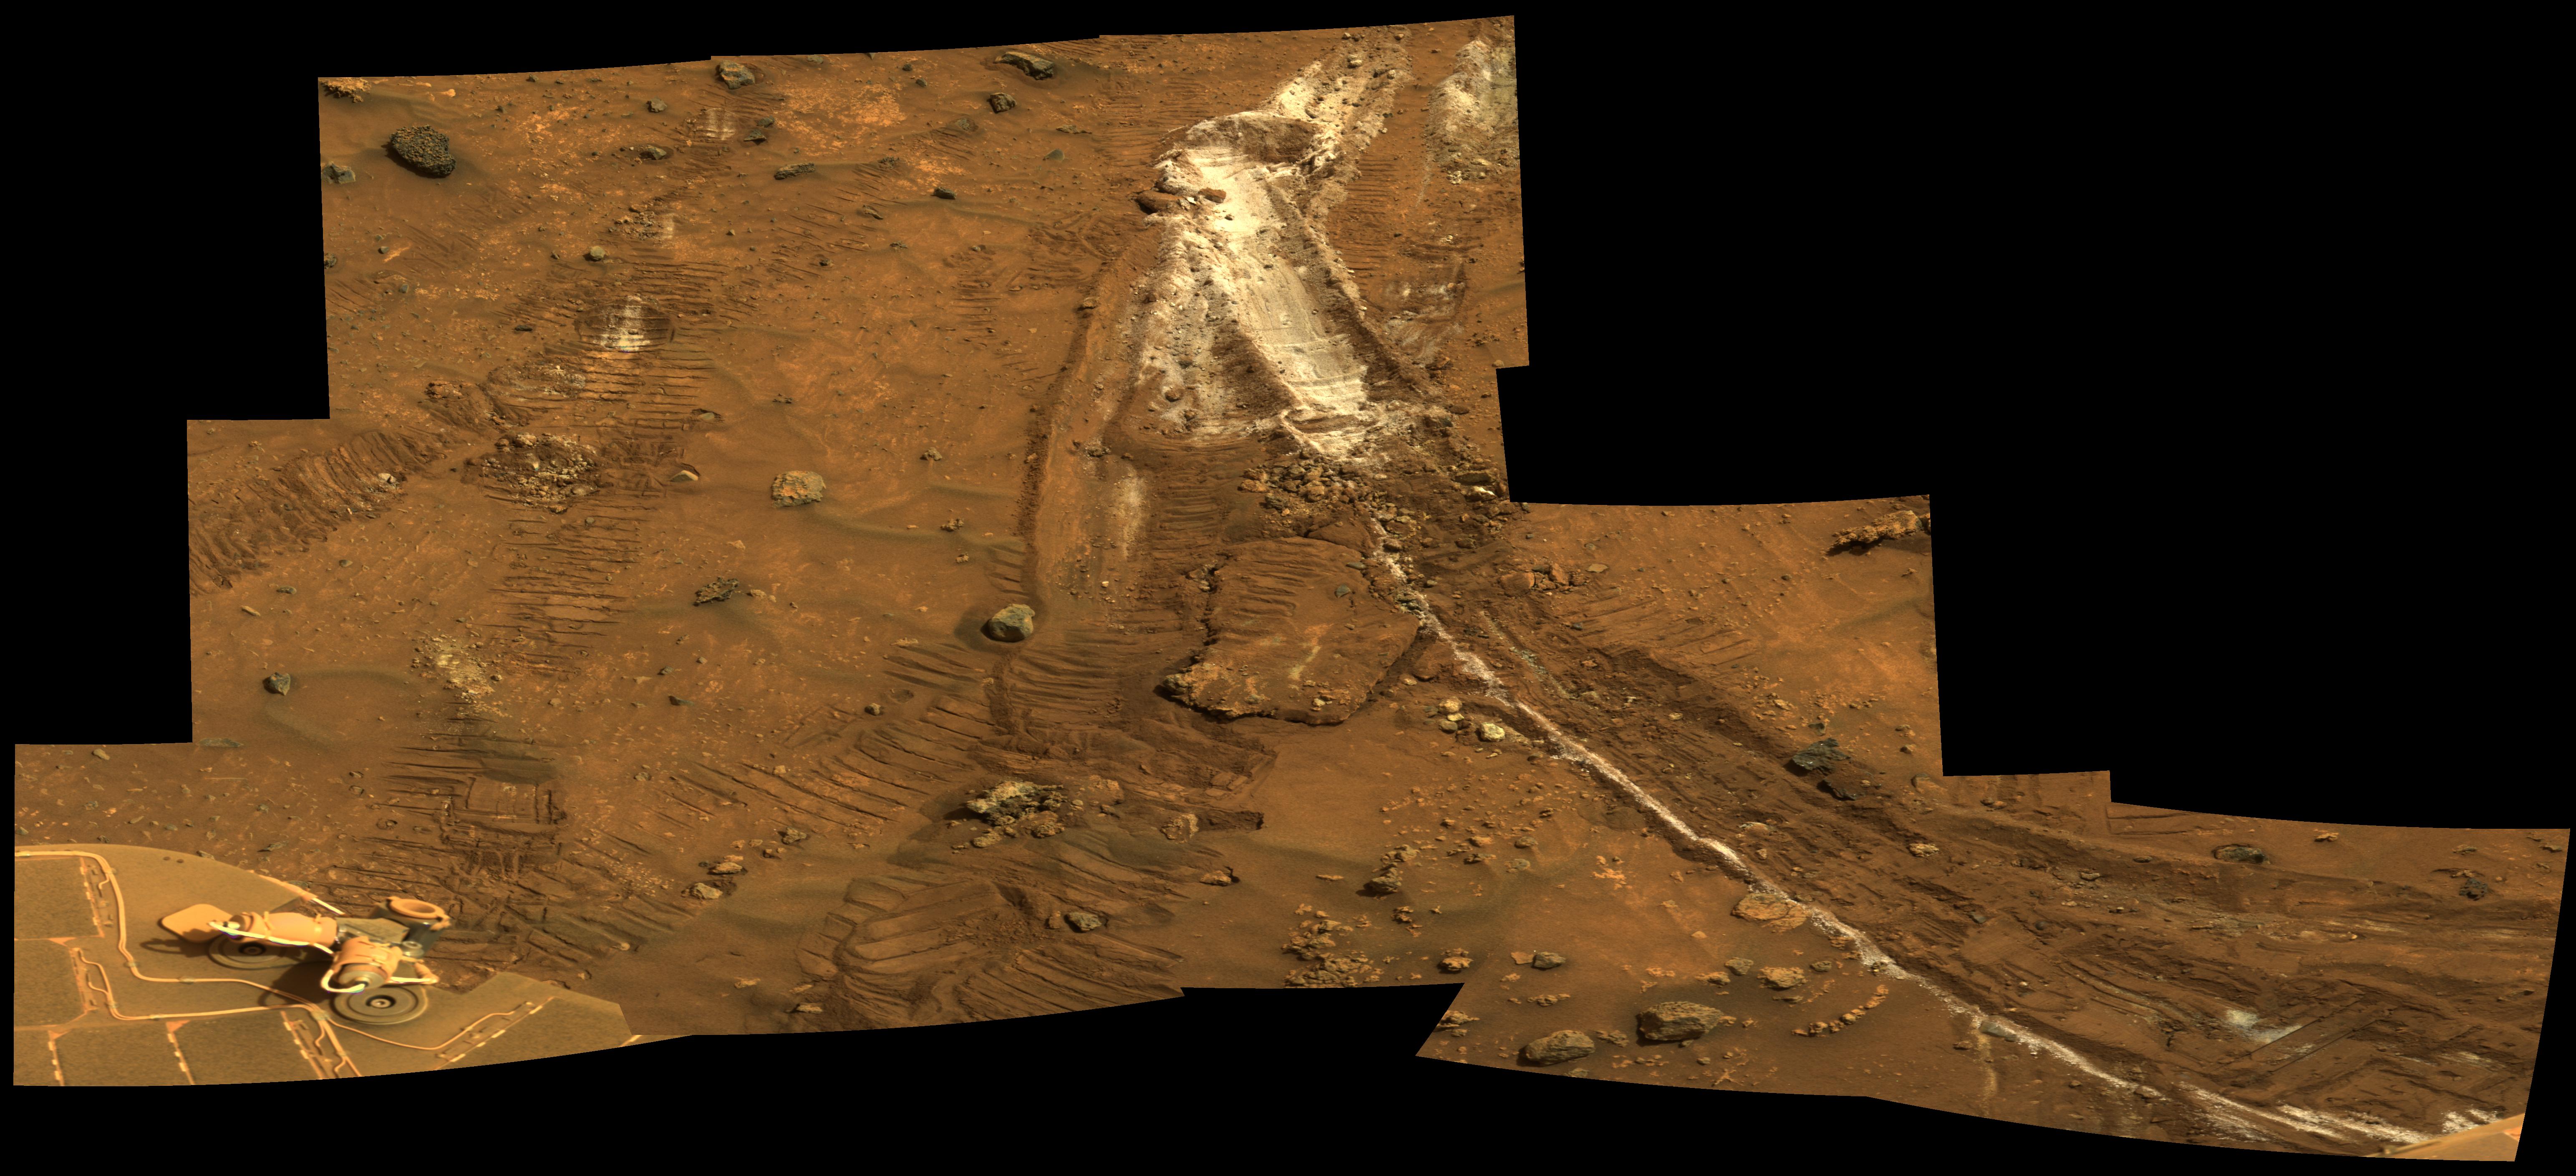 a white wheel mark in the Martian soil shows a spot where Spirit came across the mineral silica